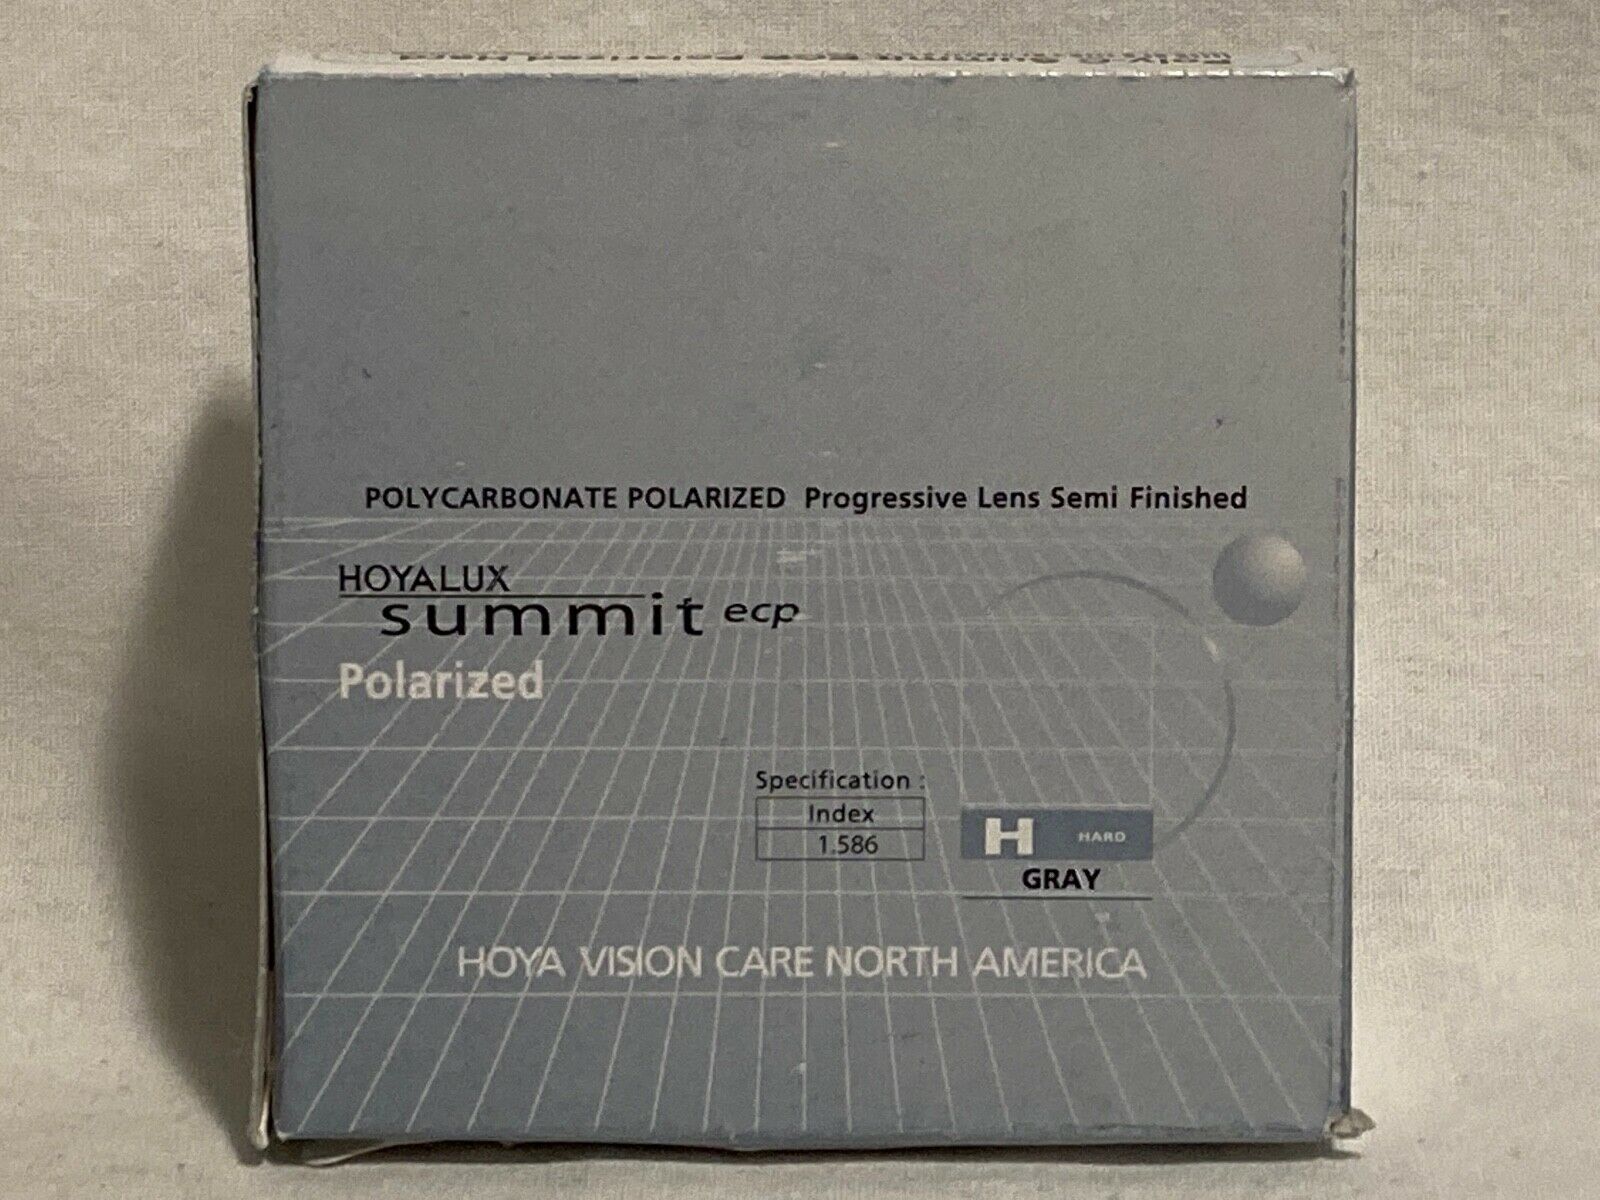 Hoya Summit Ecp Poly-c Polarized Progressive Lens Semi Finished Gray 6.25 2.25 R